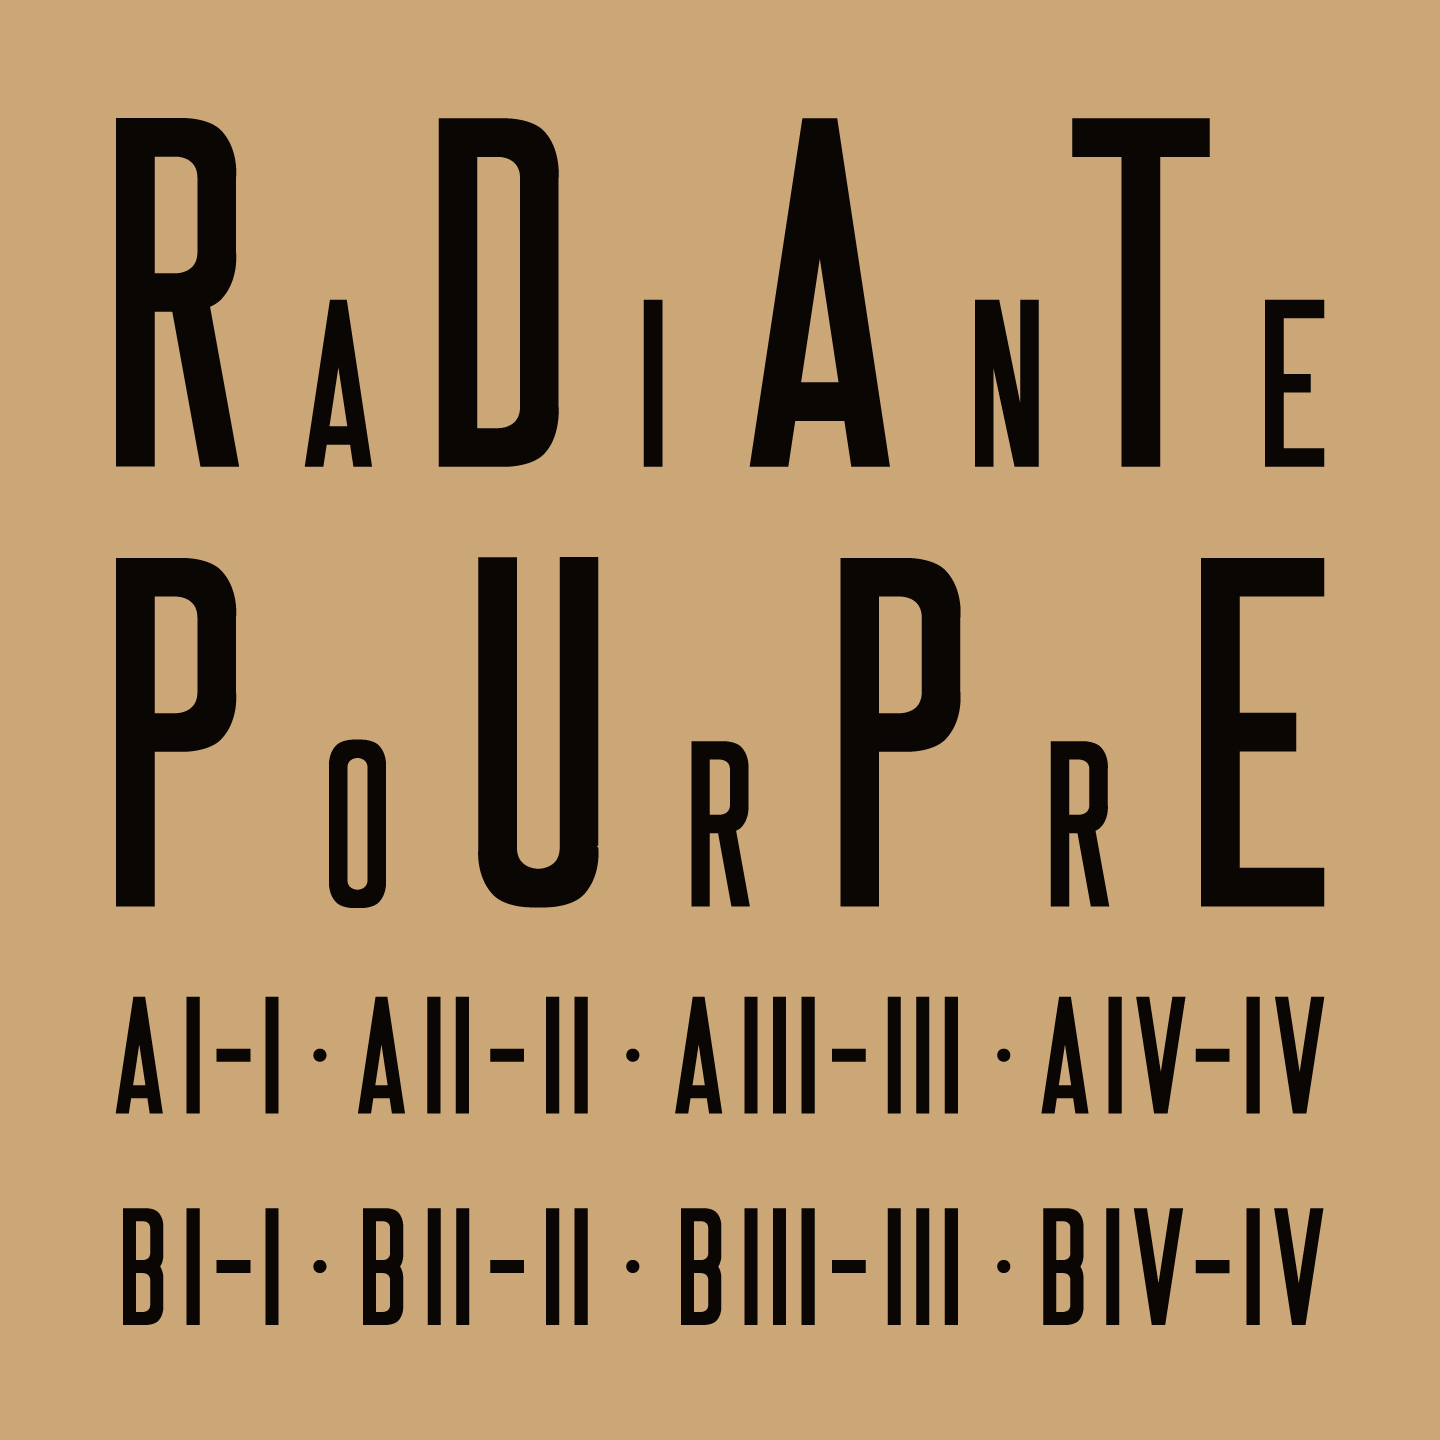 Radiante Pourpre - s/t